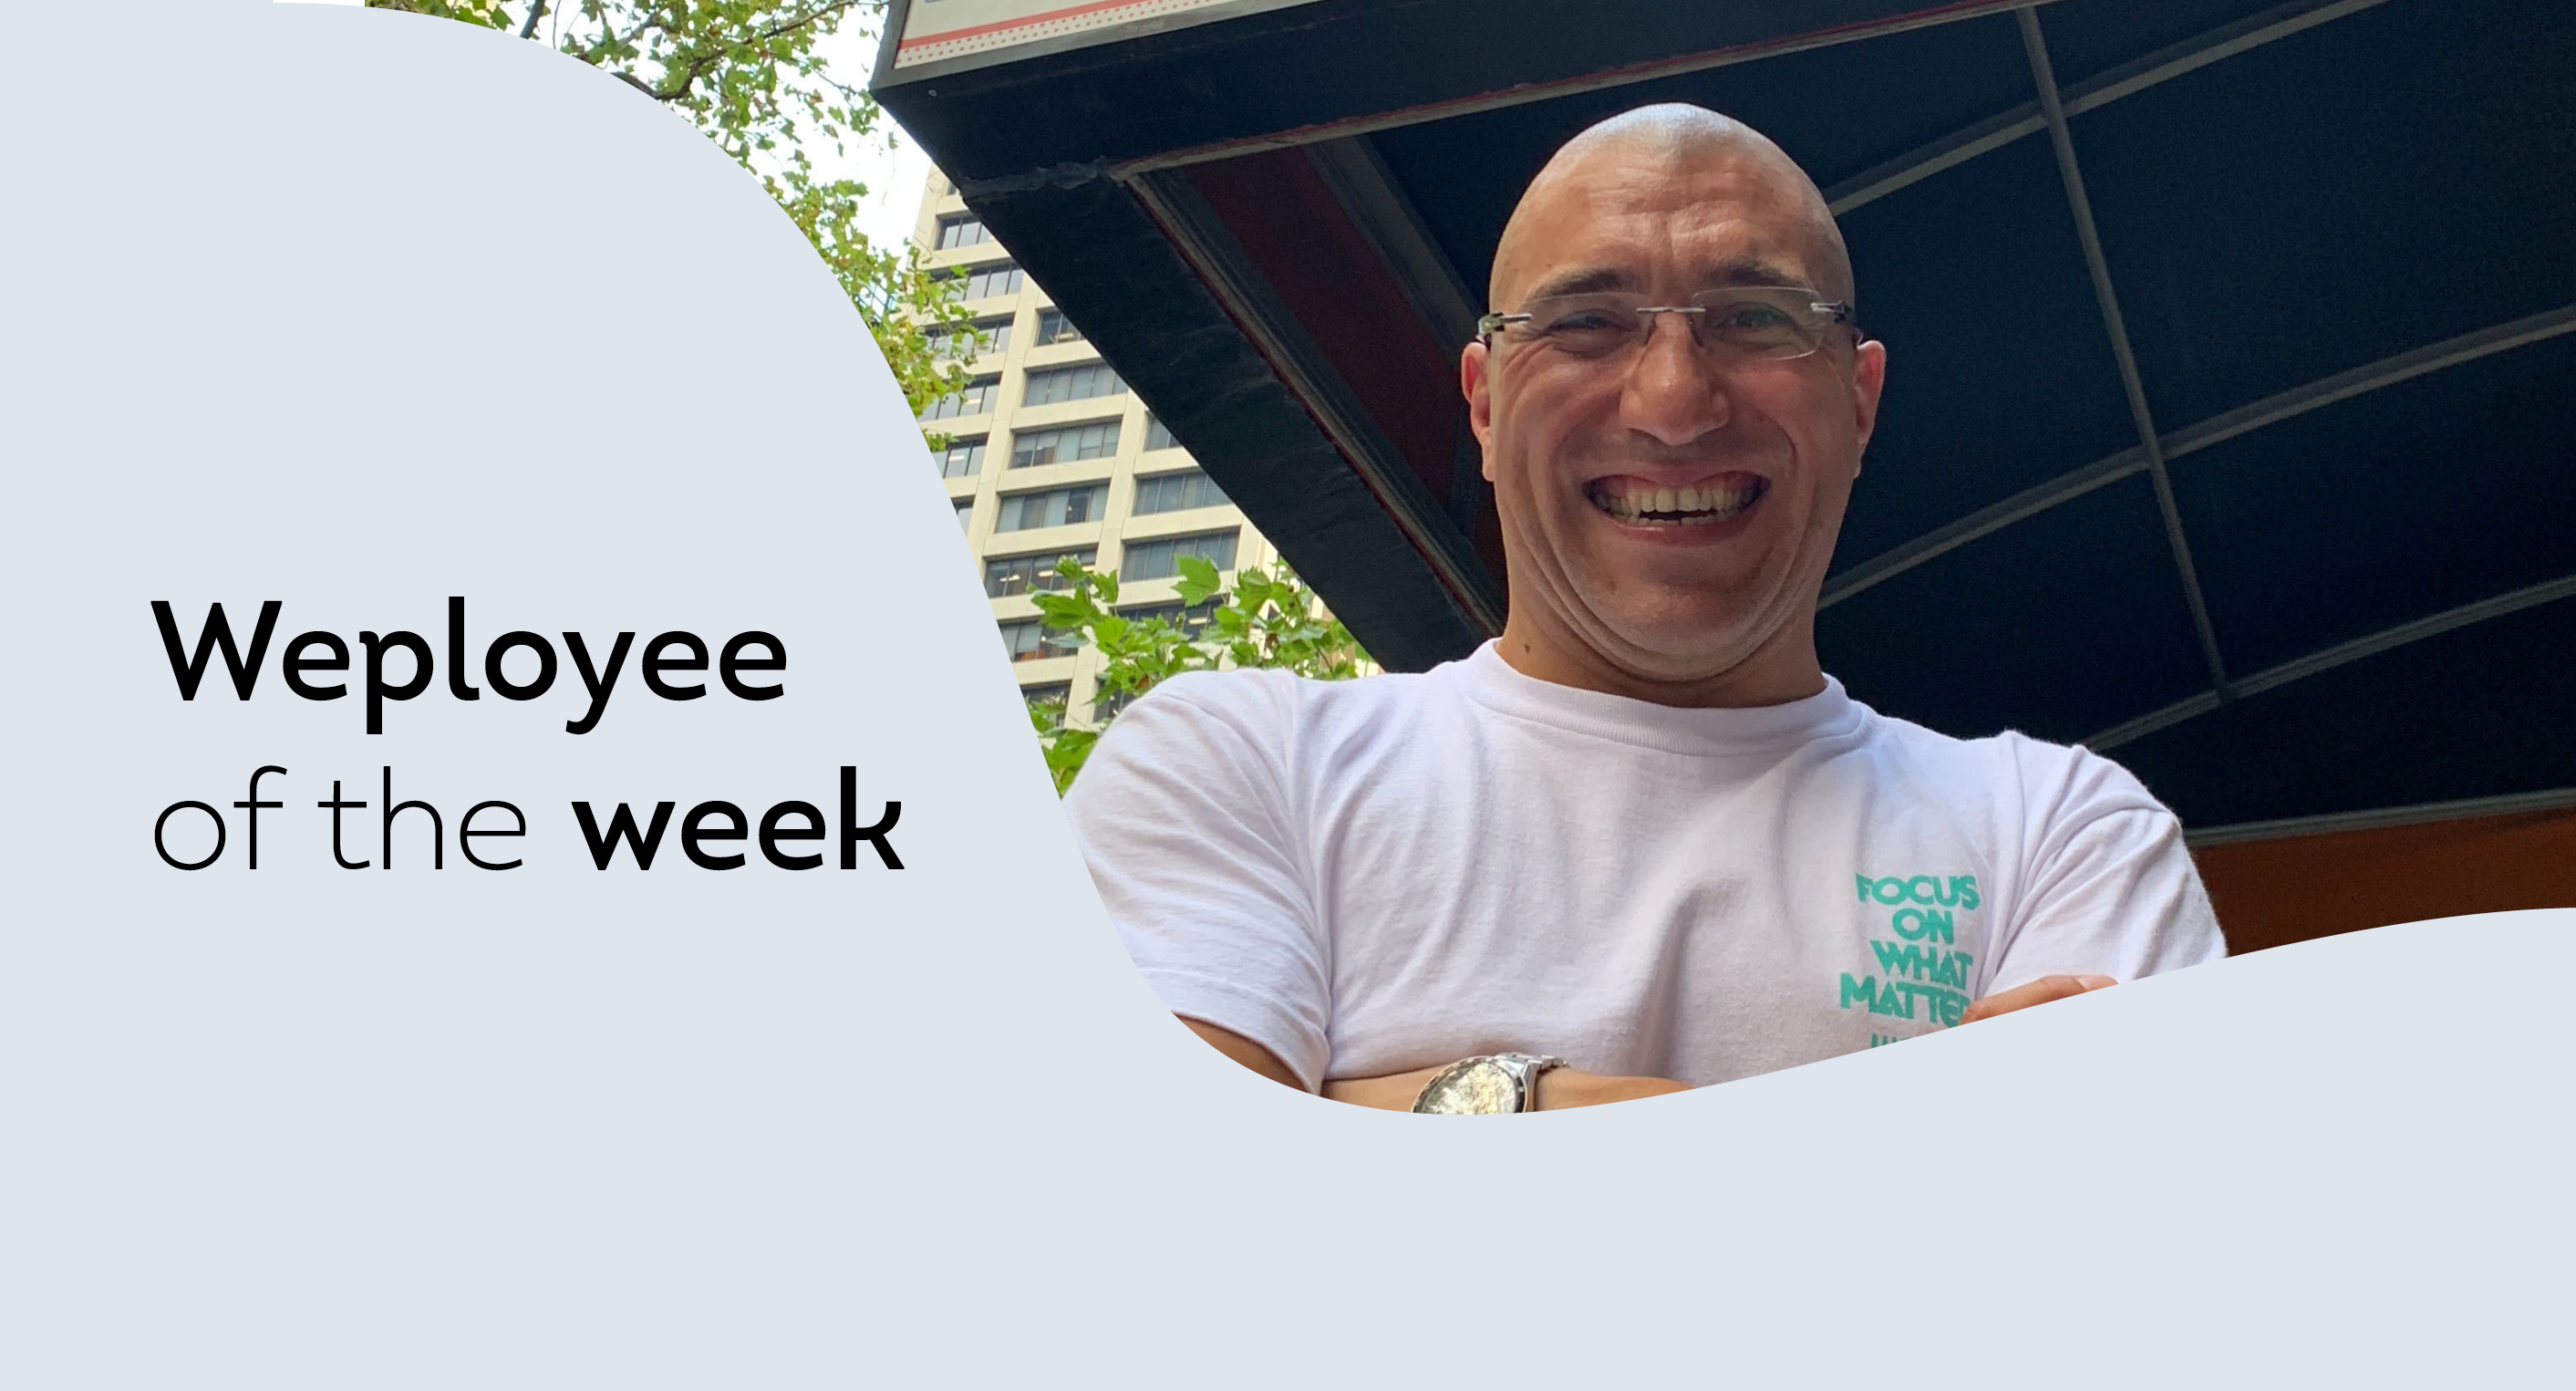 Weployee of the Week George - Featured Image2